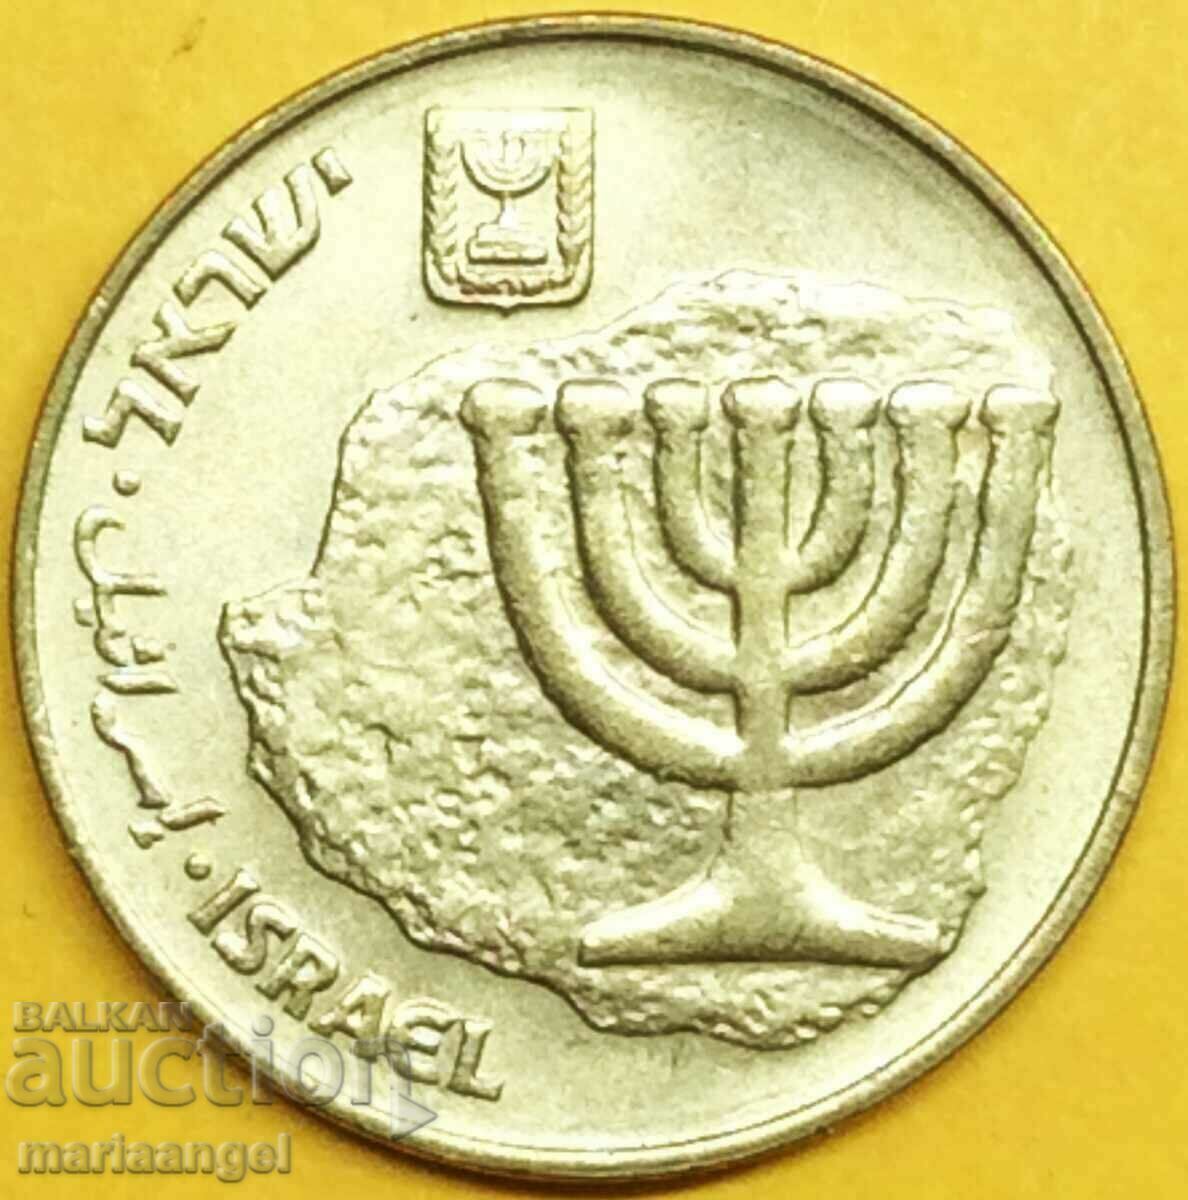 Israel 10 new shekels